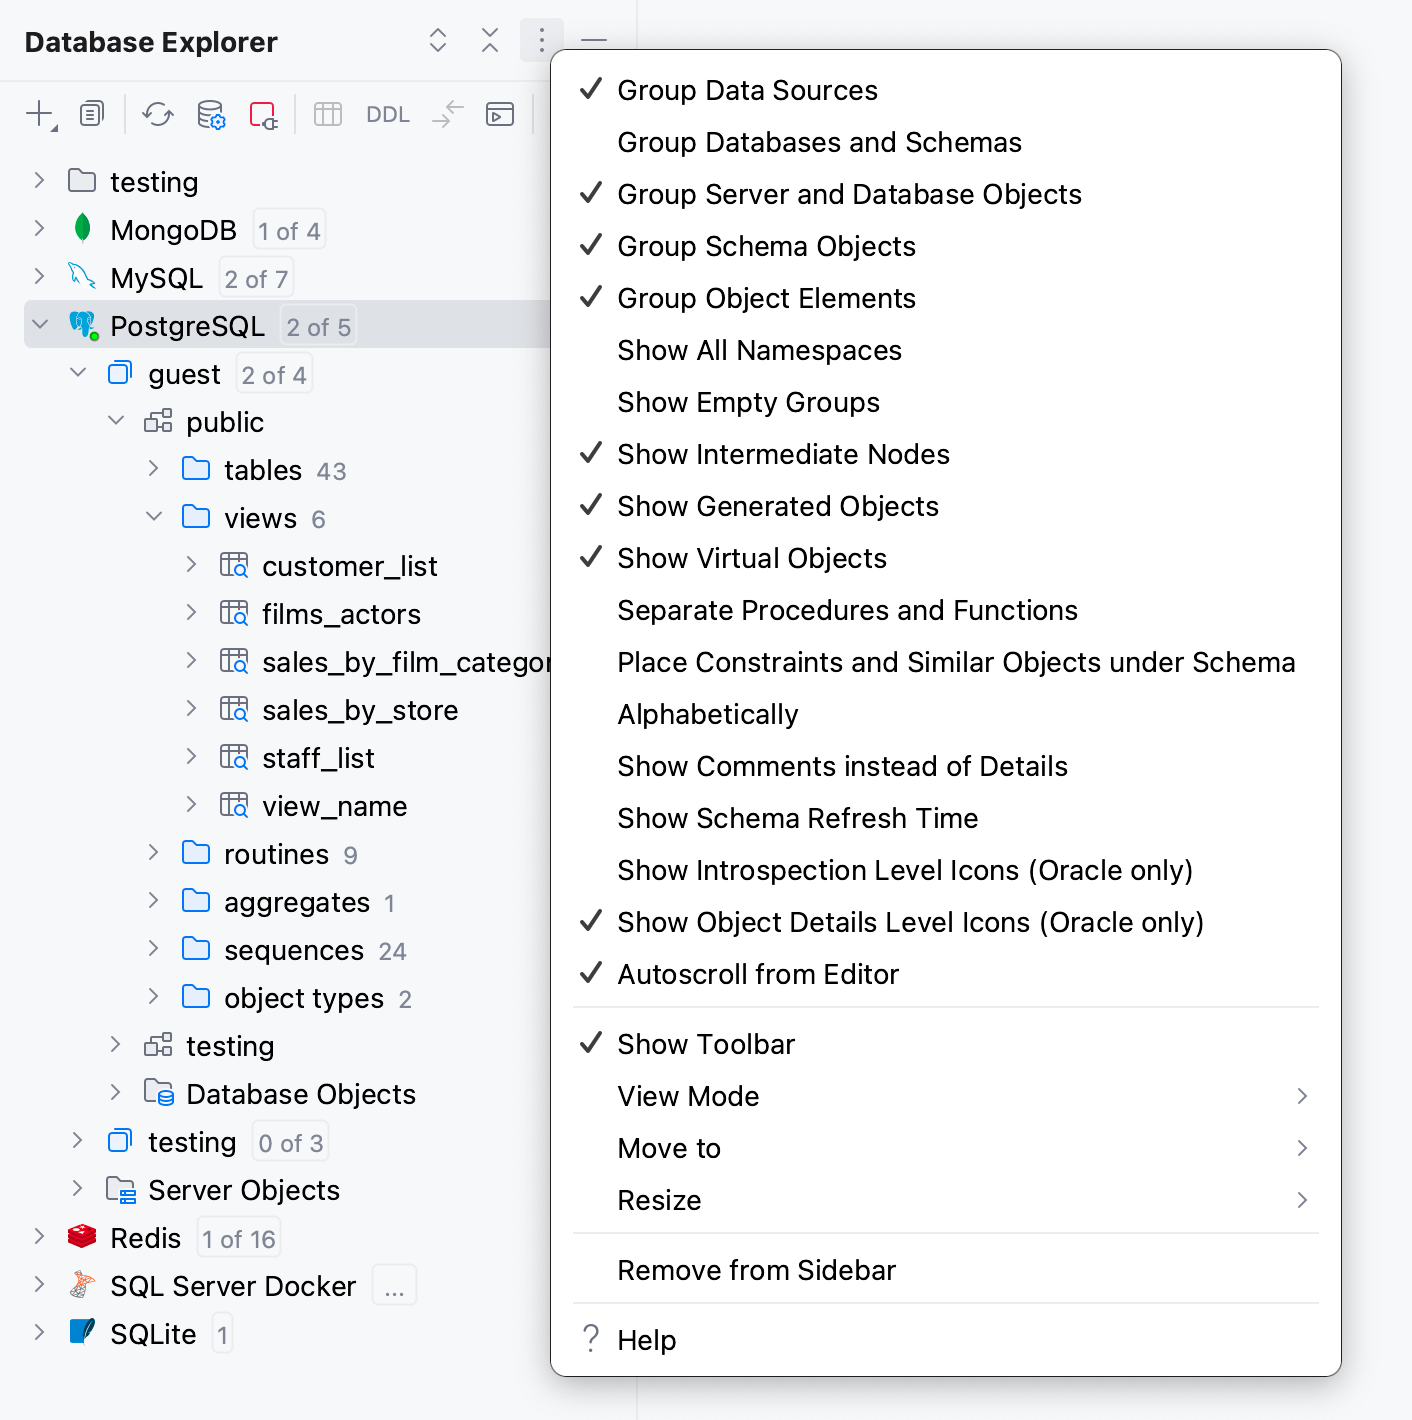 Database Explorer Options menu items